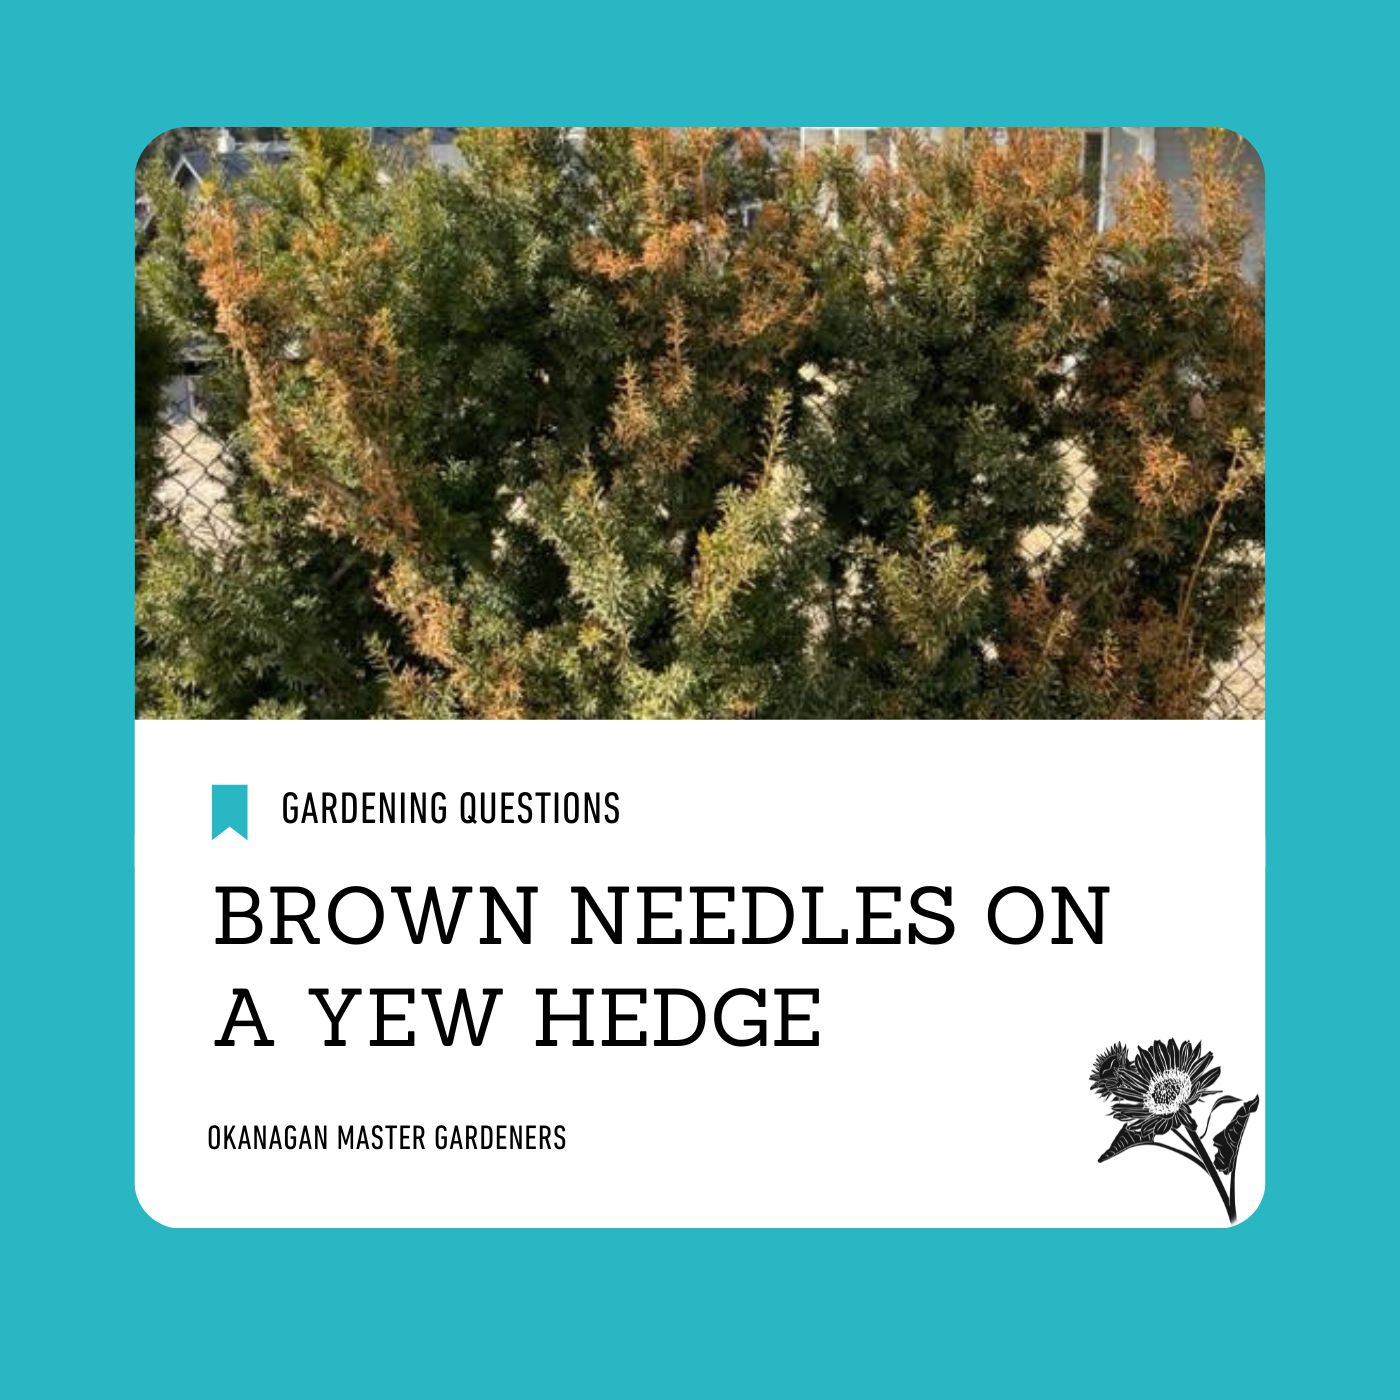 Brown needles on yew hedge